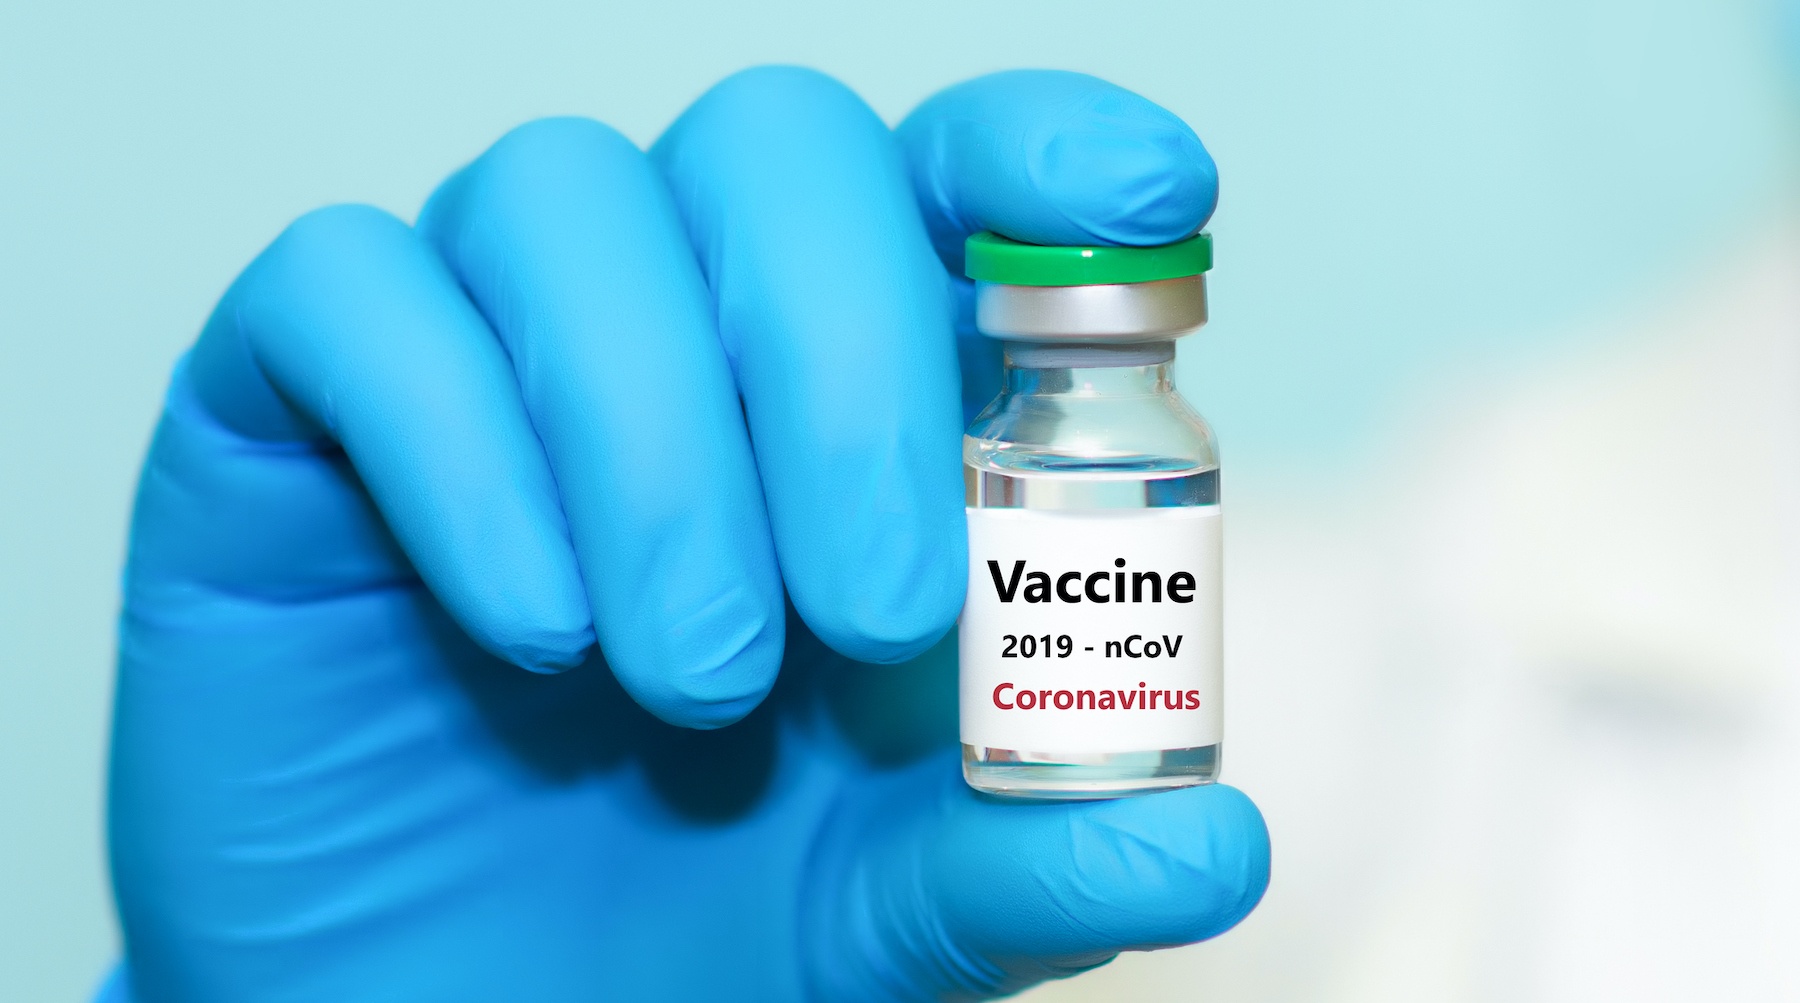 A gloved hand holds a SARS-CoV-2 vaccine vial